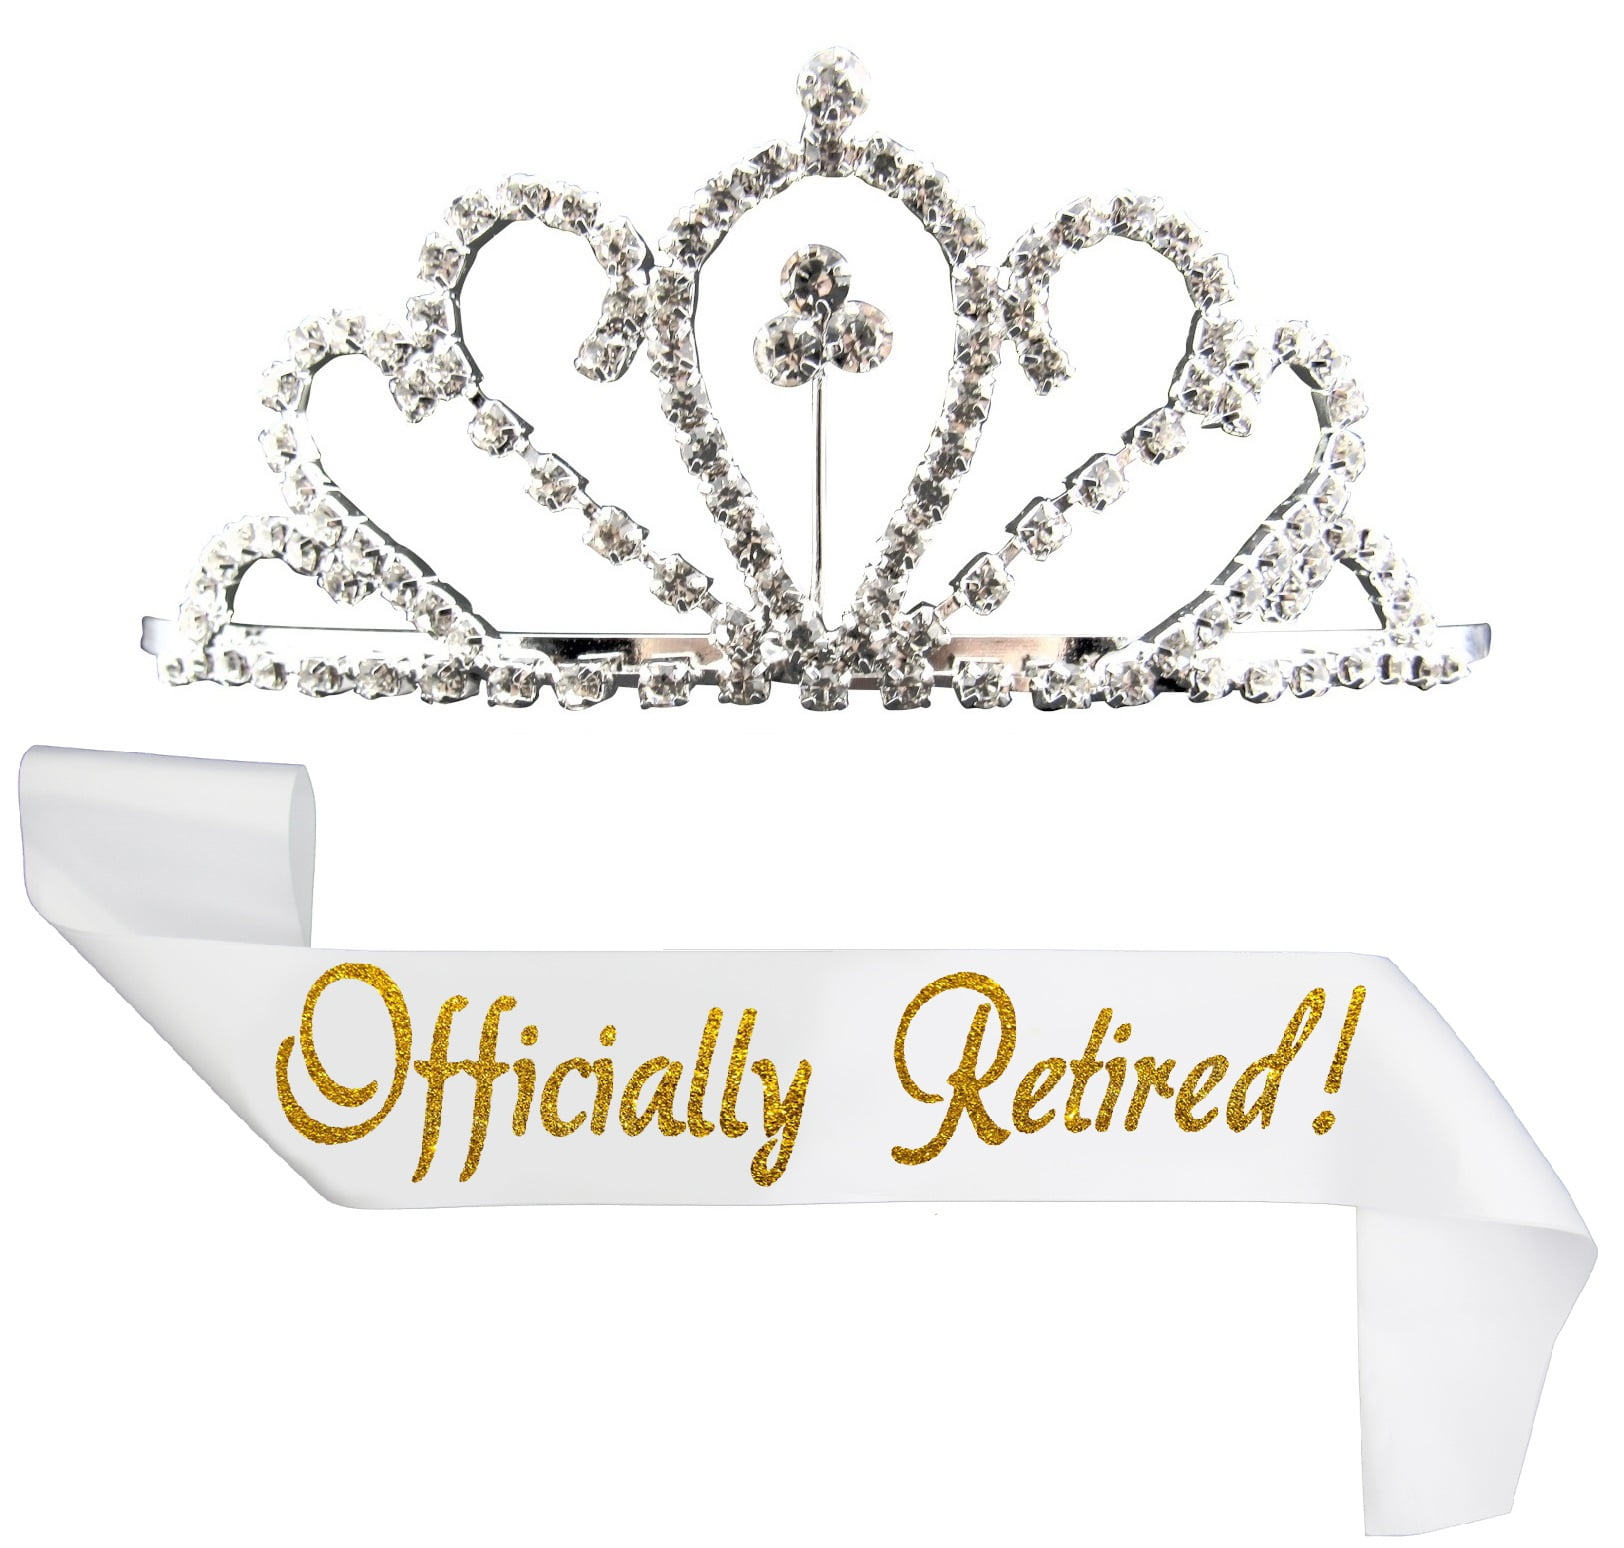 SAVITA 2pcs Retirement Crown and Sash Silver Officially Retired Crown and Sash for Women for Retirement Party Decorations Supplies